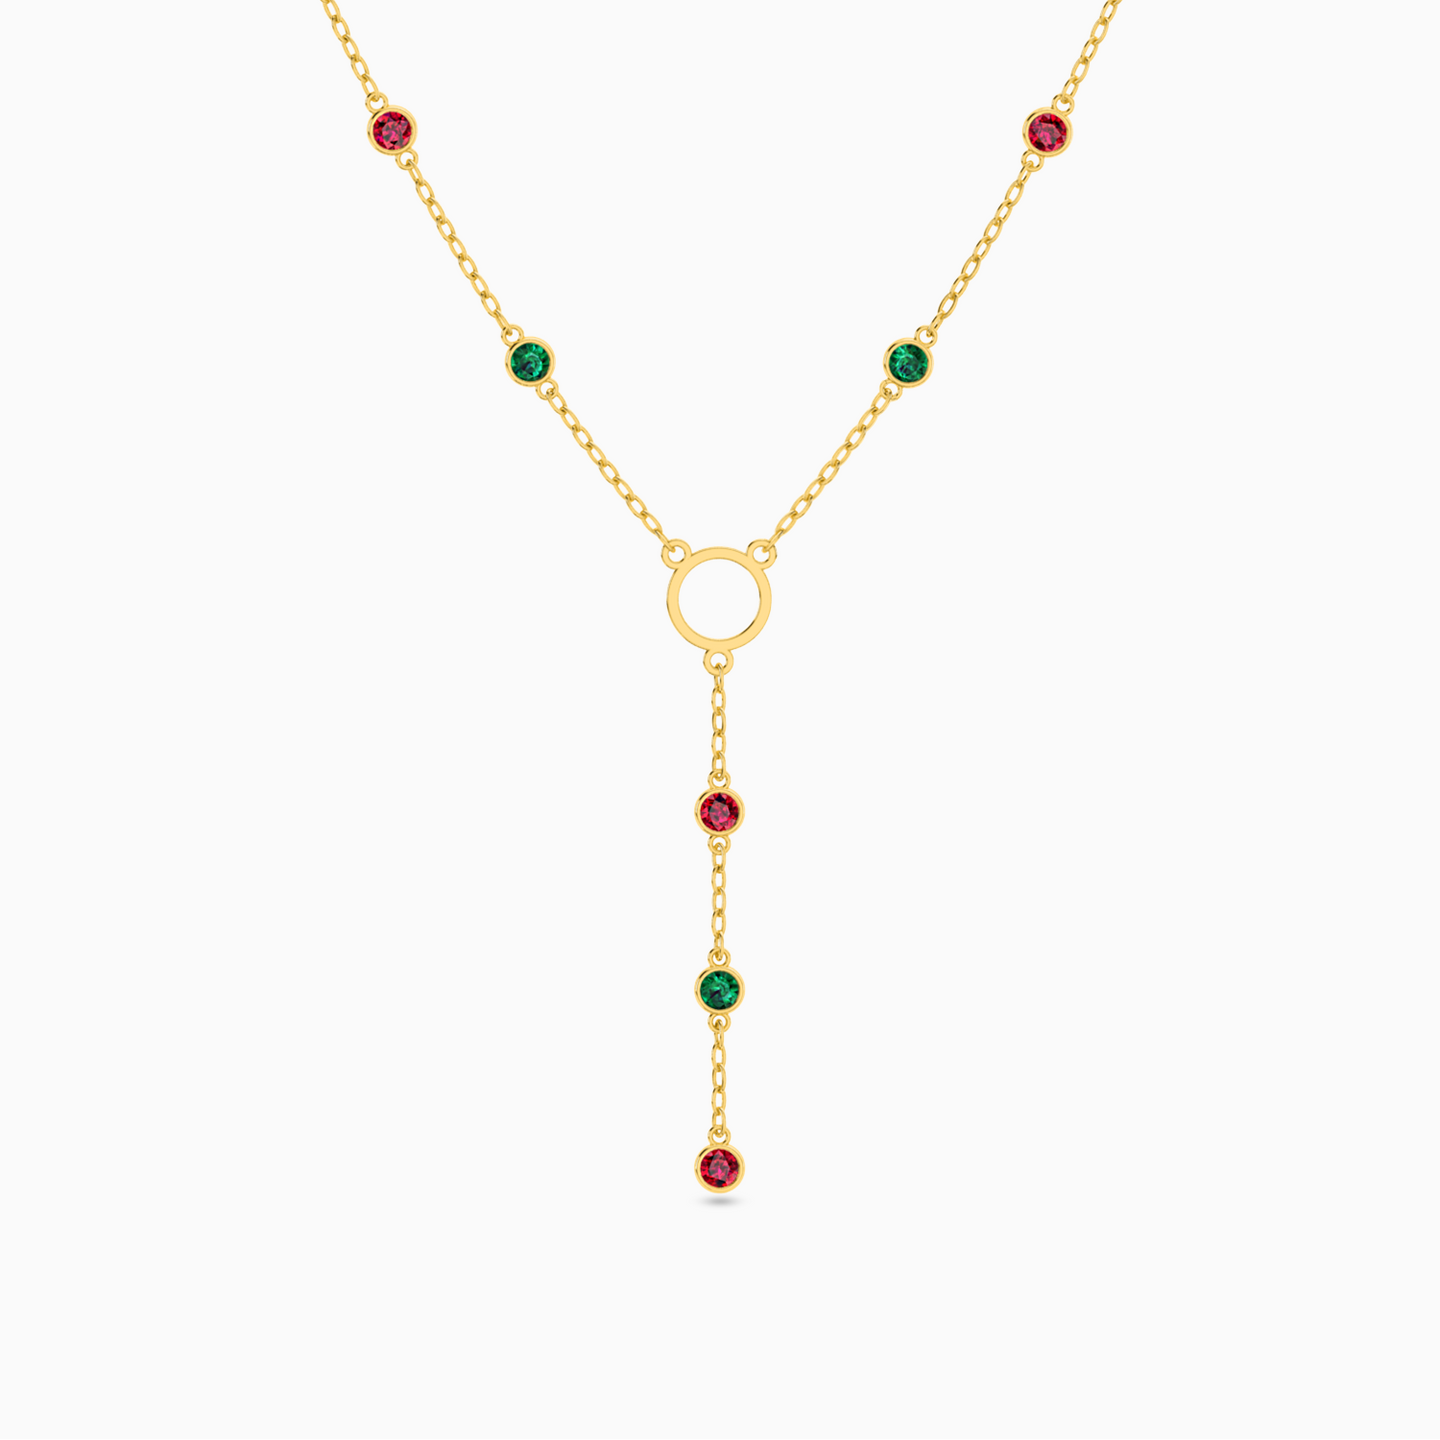 18K Gold Colored Stones Pendant Necklace